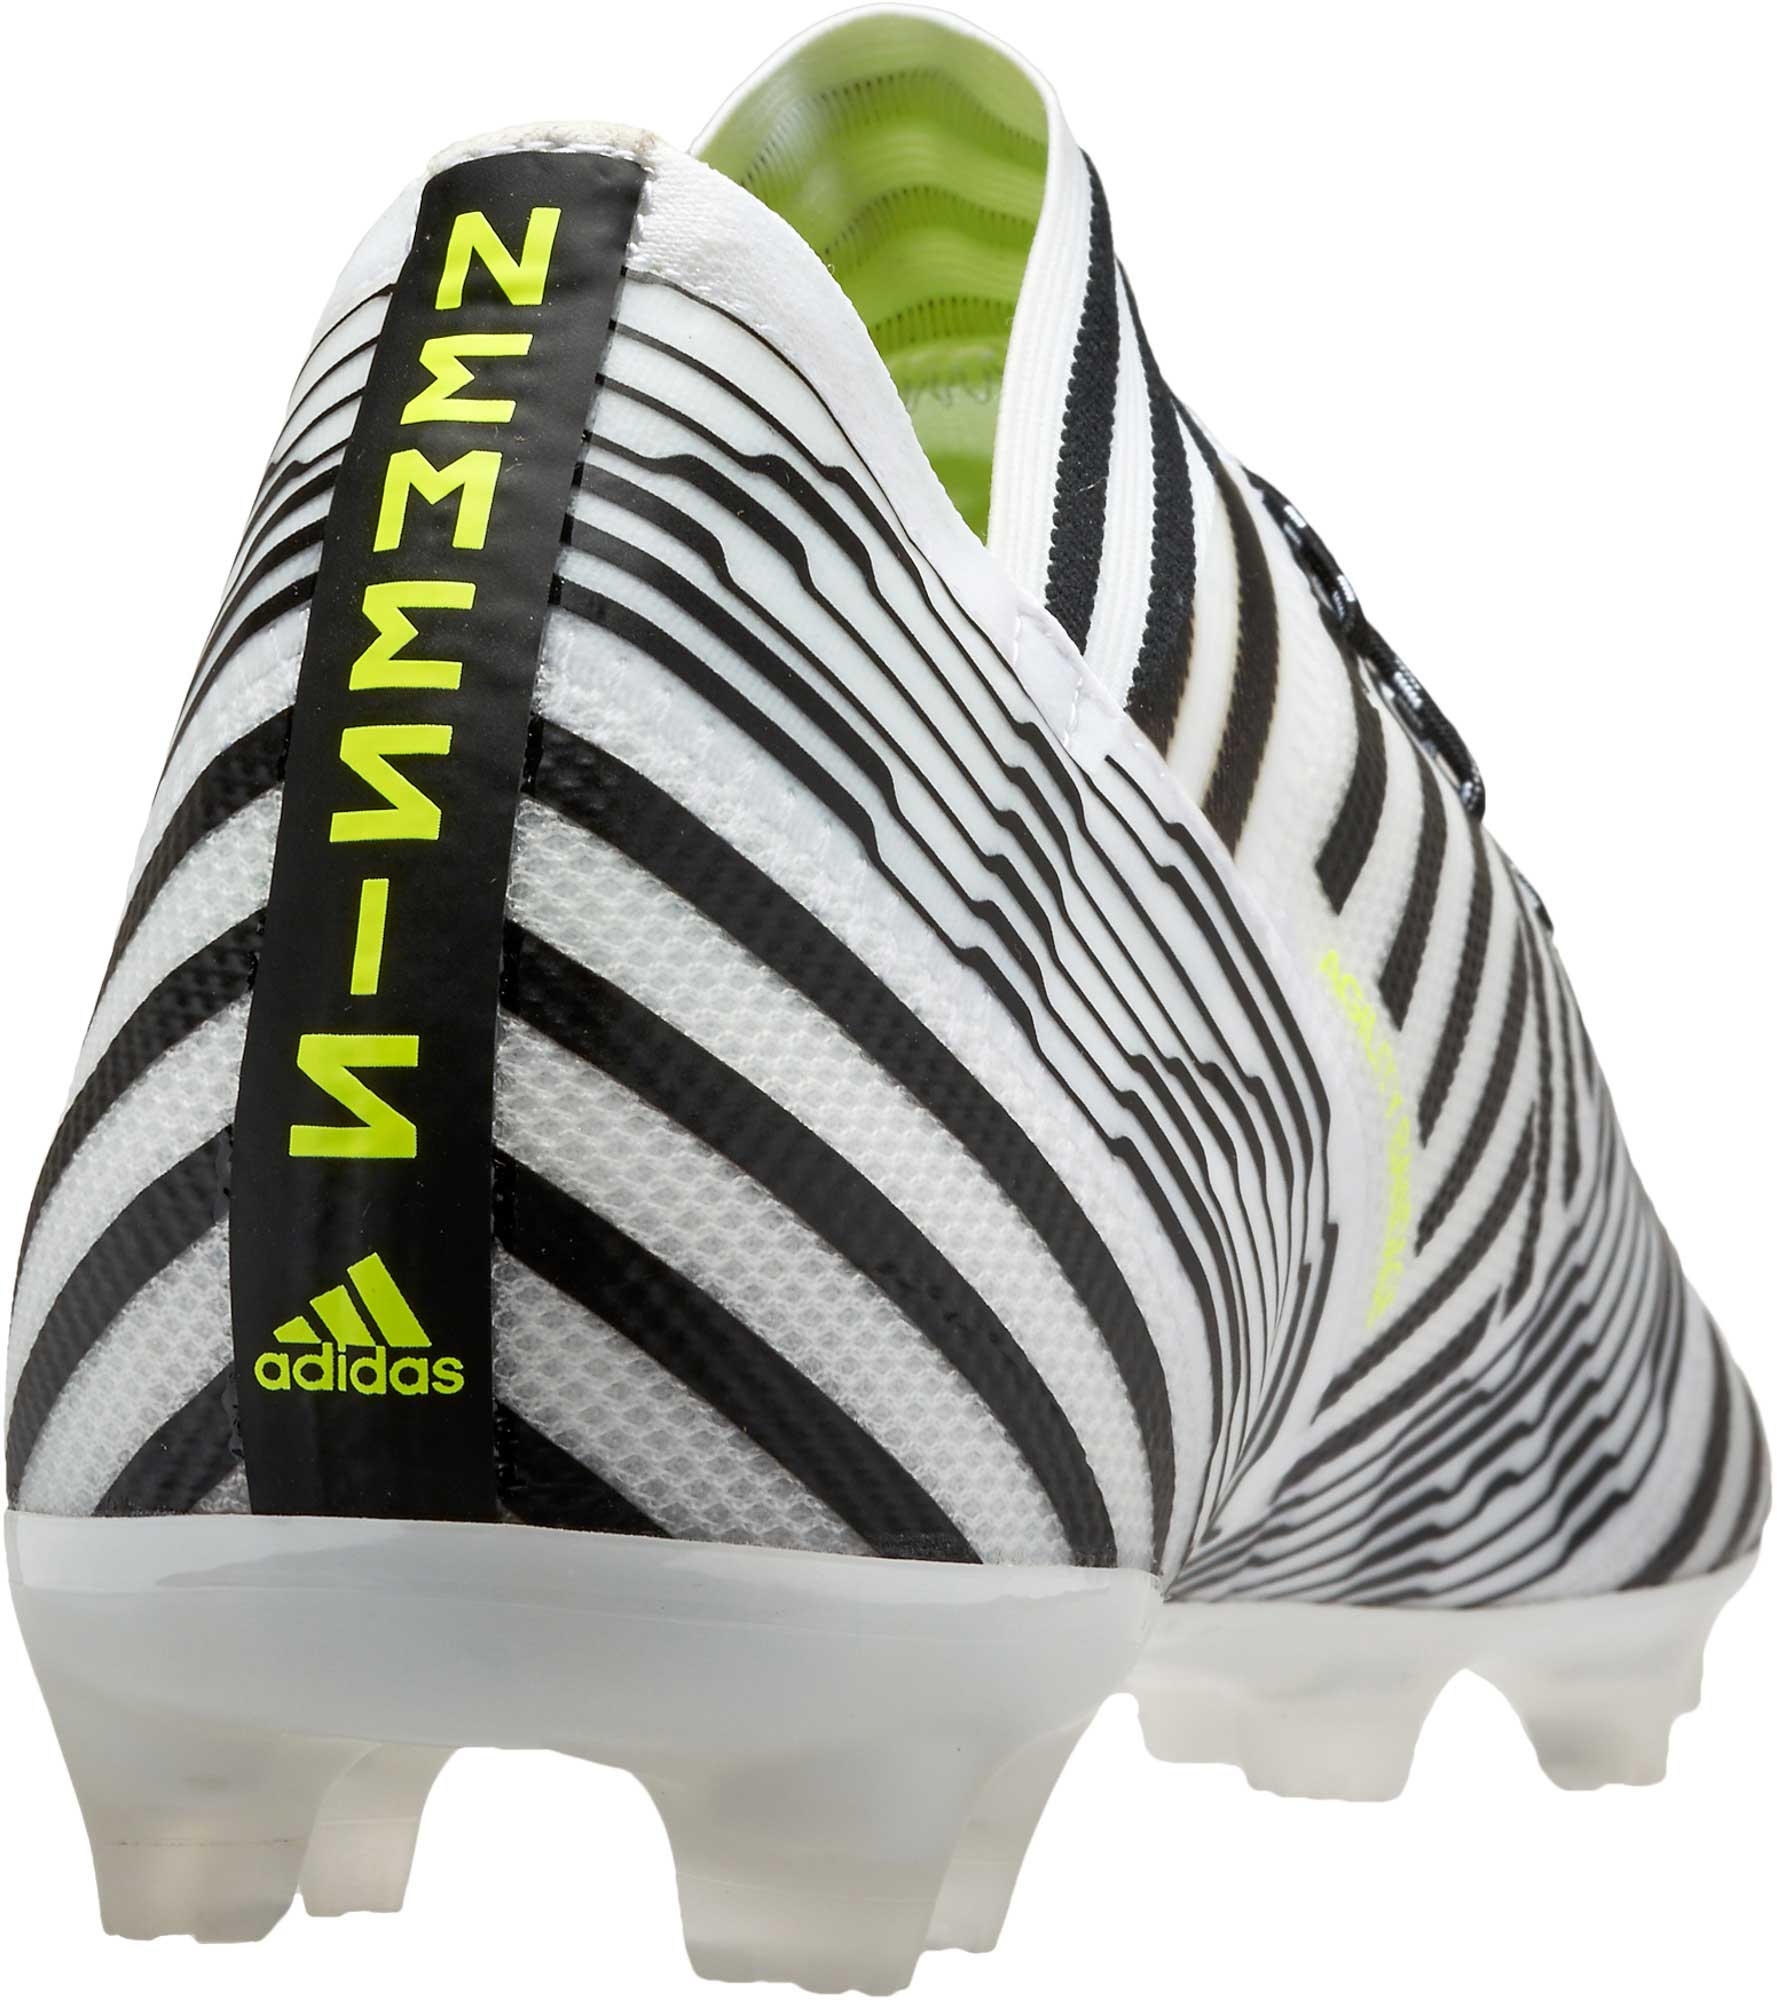 Adidas Nemeziz 17 2 Fg White Soccer Cleats